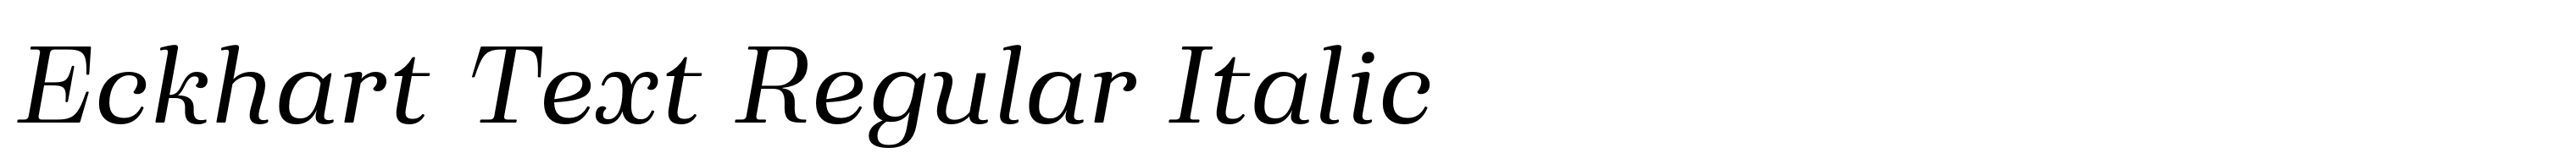 Eckhart Text Regular Italic